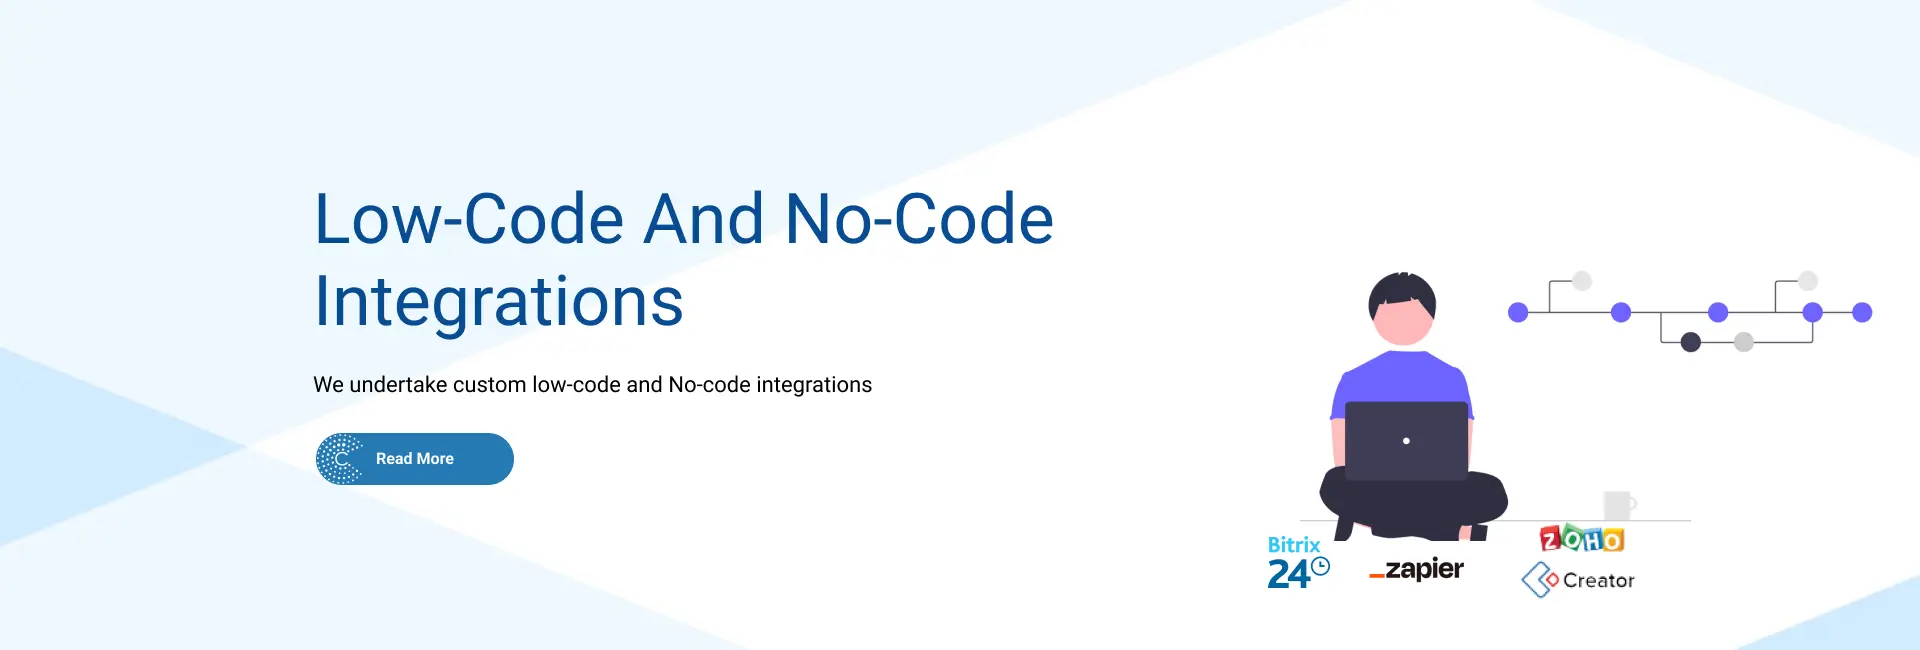 Low-Code / No-Code Integrations - We undertake custom low-code and No-code integrations